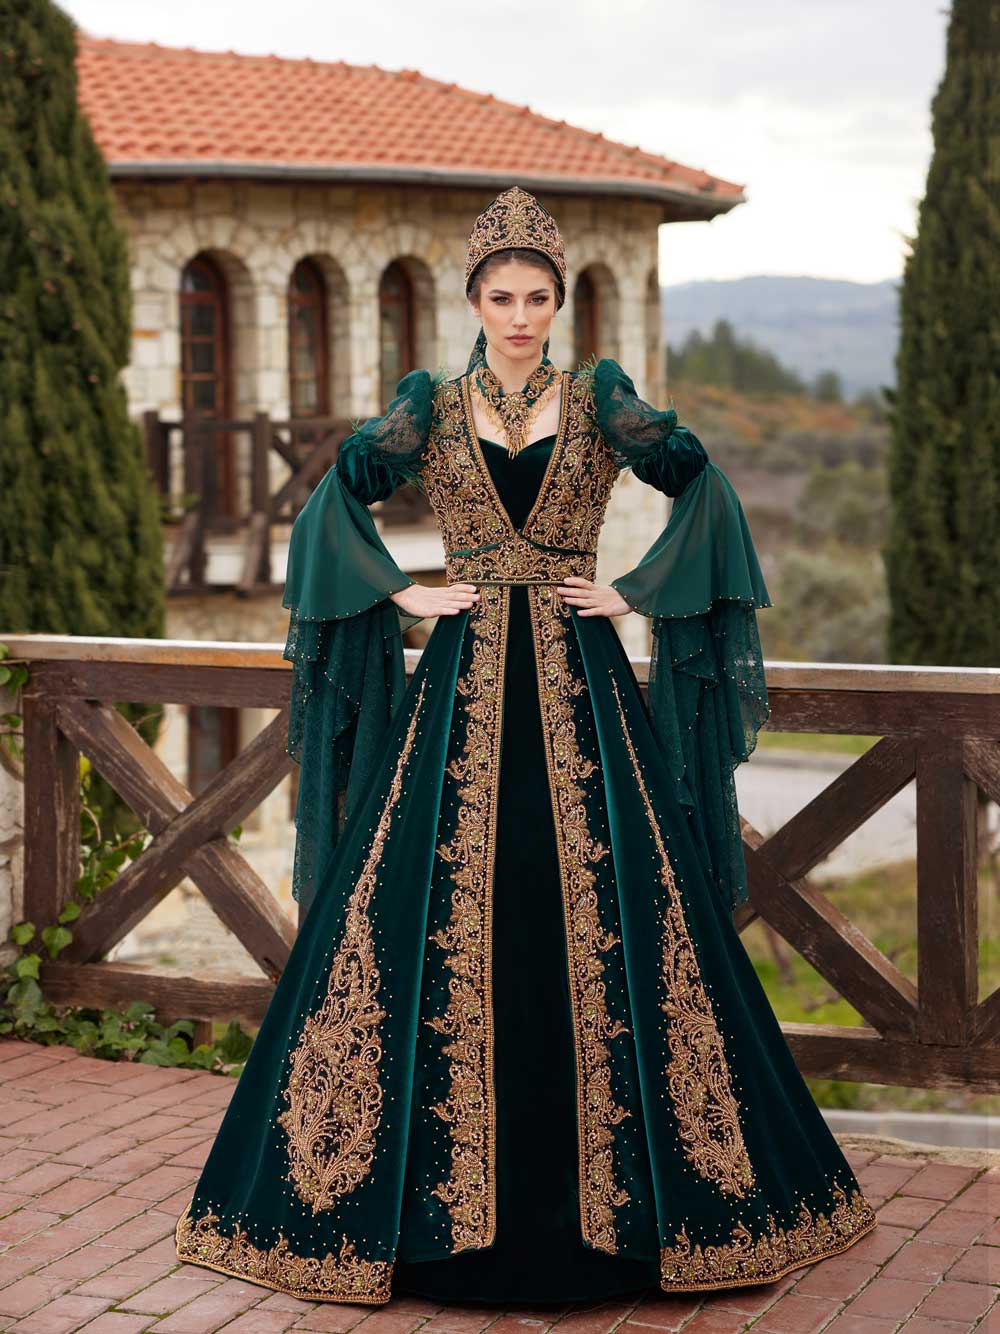 buy Elegant Emerald Green Beaded On Gold Lace Applique Long Sleeve Wedding Henna Kaftan Gown Dress online turkish henna dresses stores